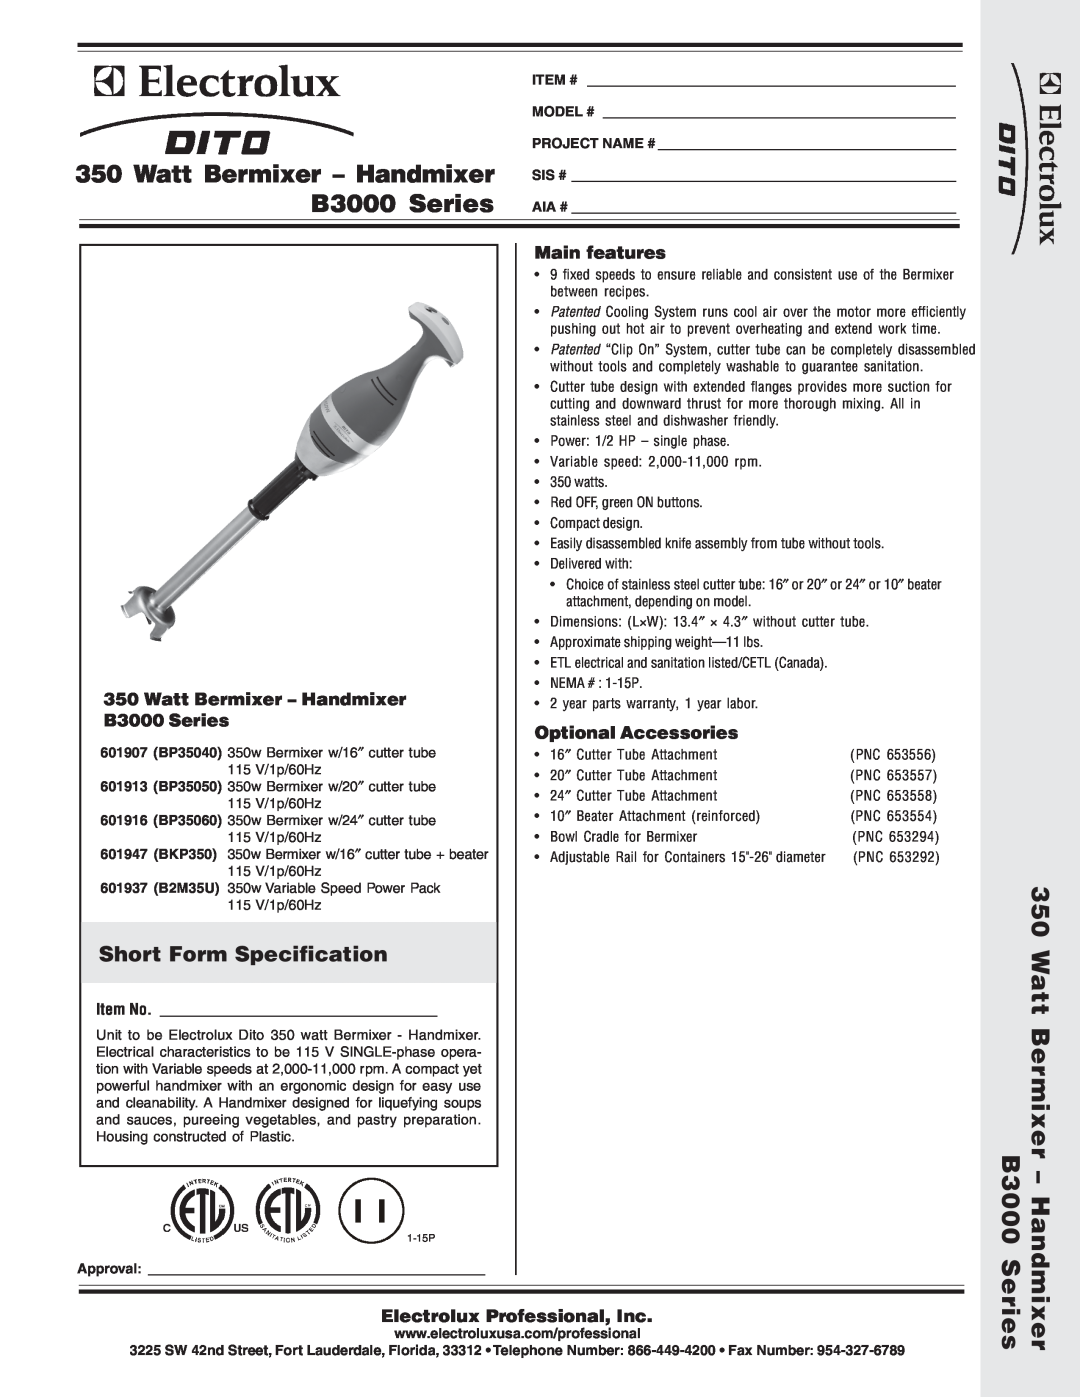 Electrolux BP35050 dimensions Short Form Specification, Item No, Watt Bermixer - Handmixer, B3000 Series, Main features 